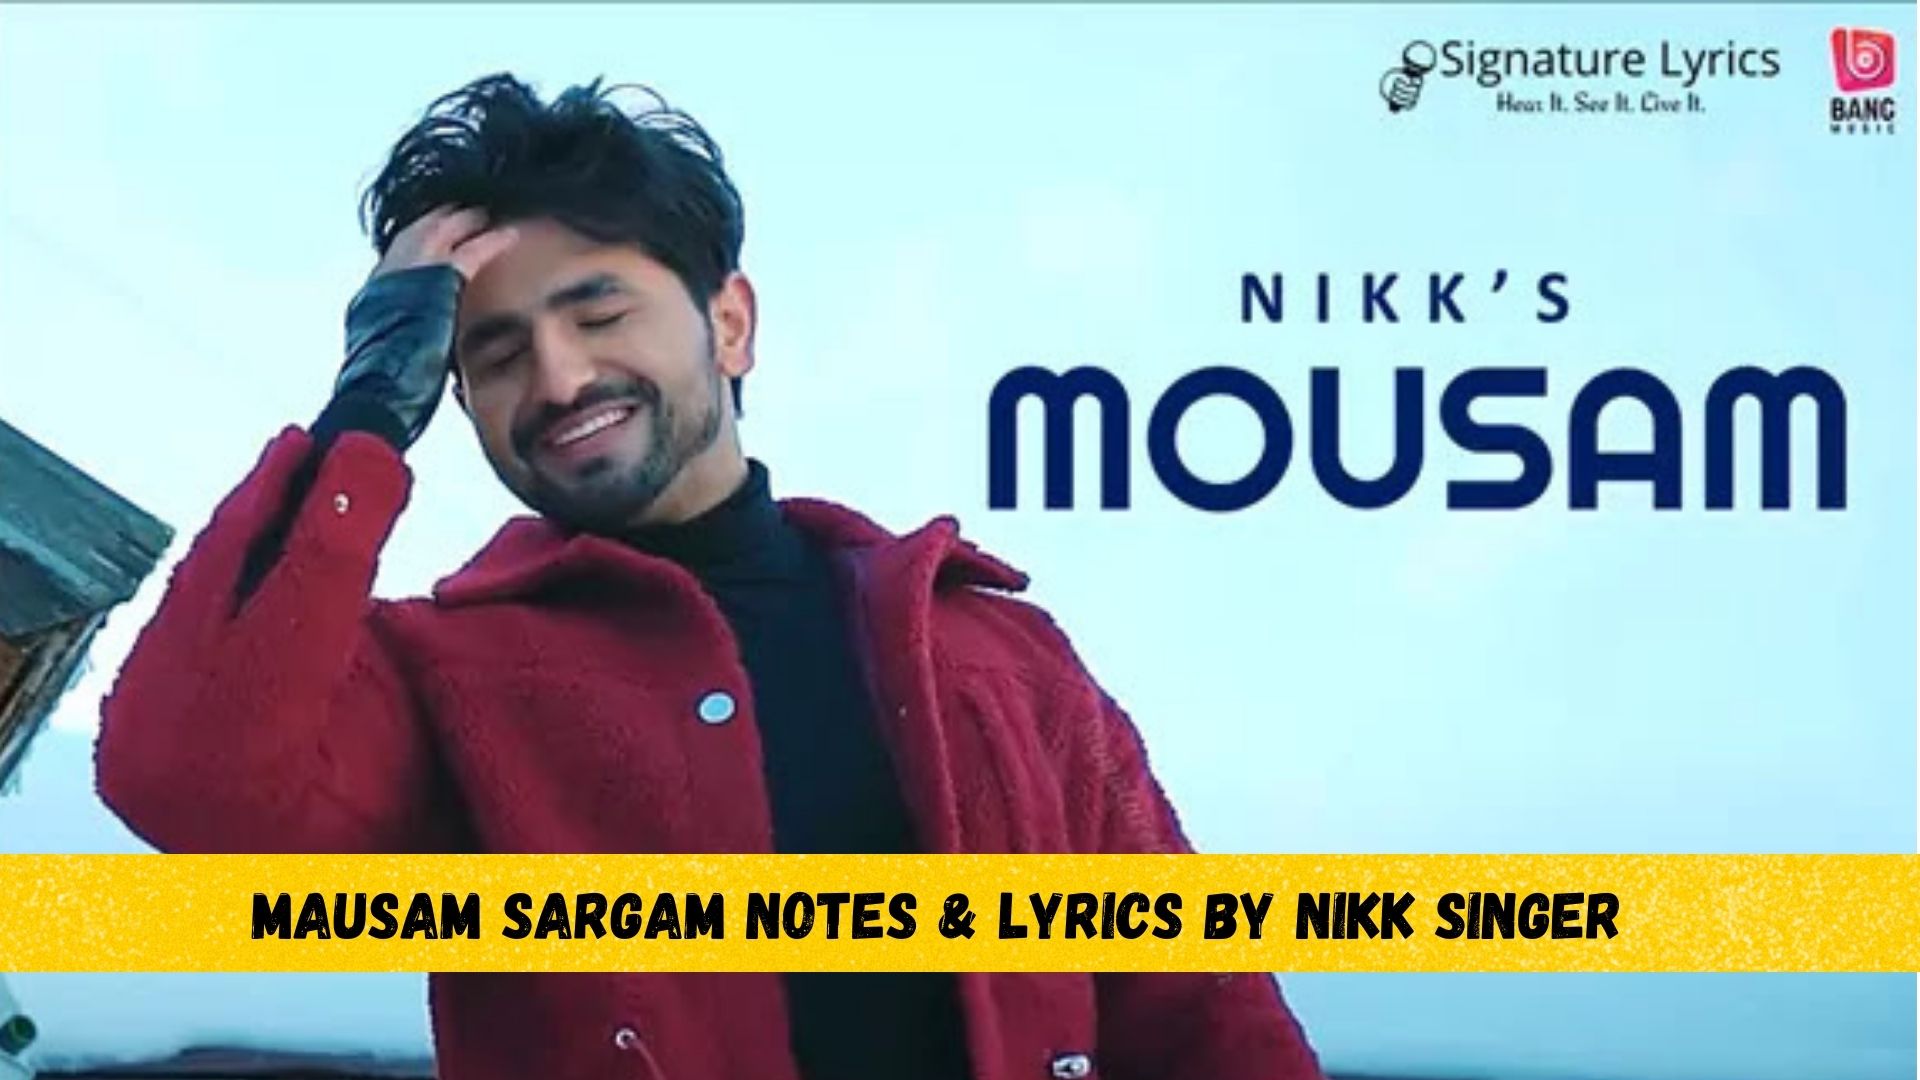 Mausam Sargam Notes & Lyrics by Nikk Singer